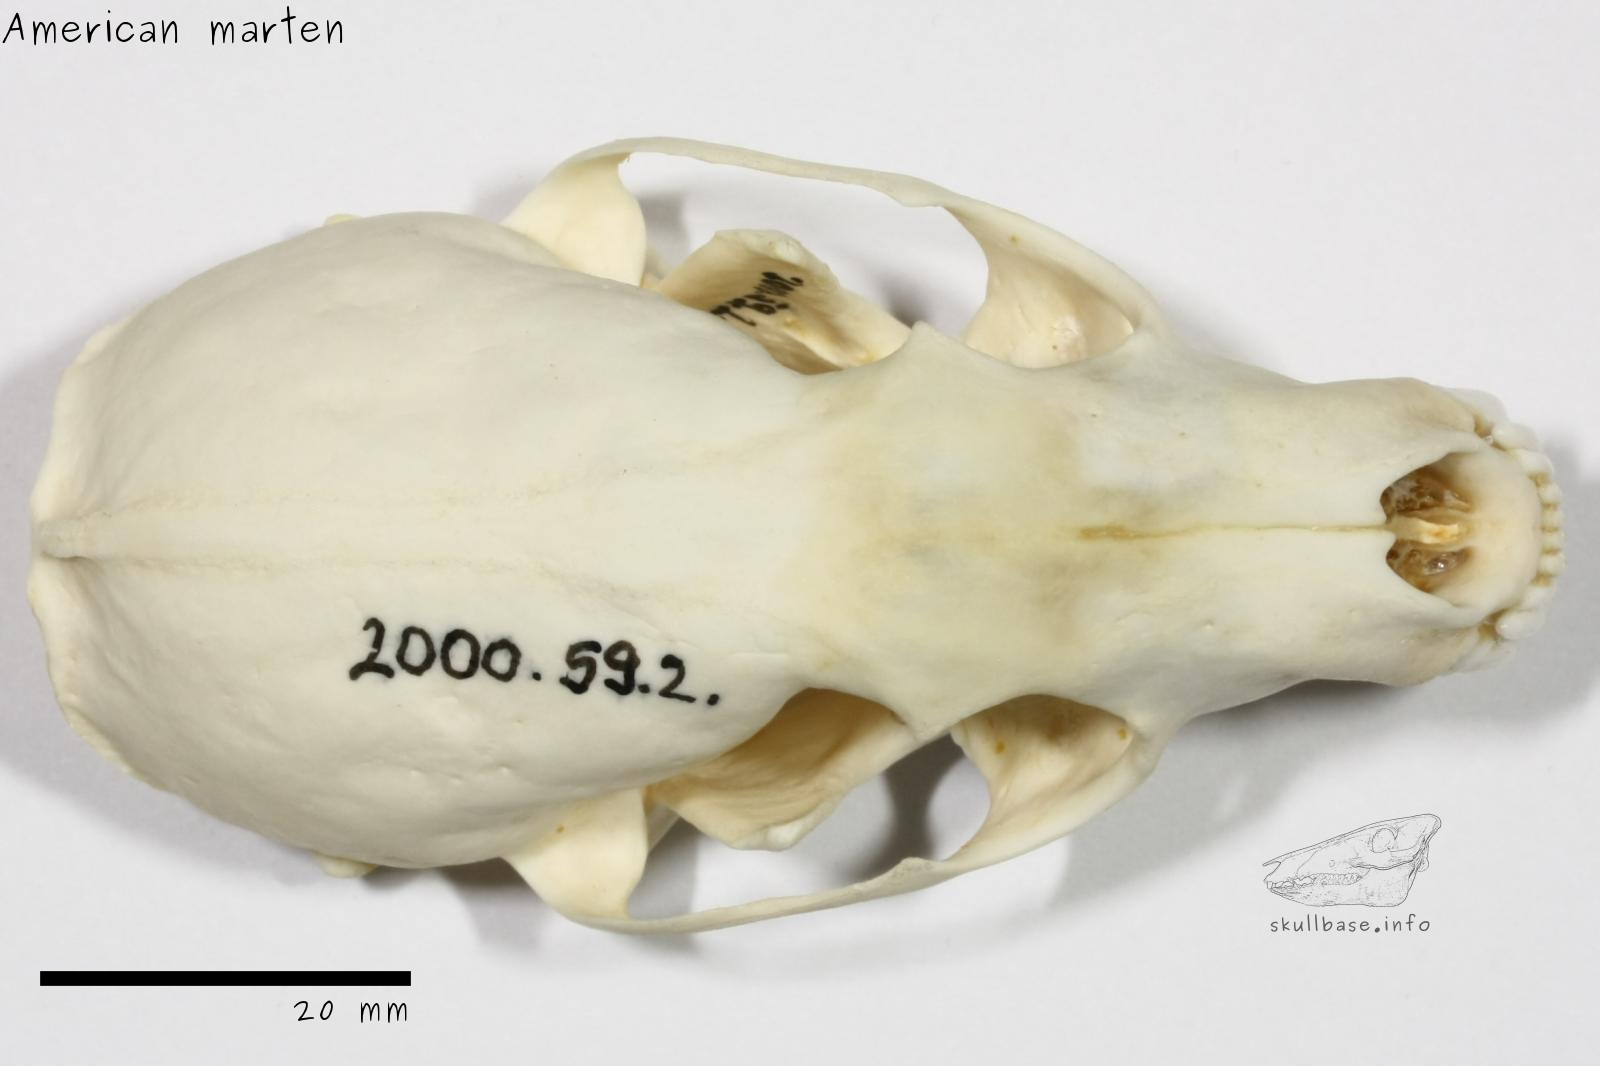 American marten (Martes americana) skull dorsal view